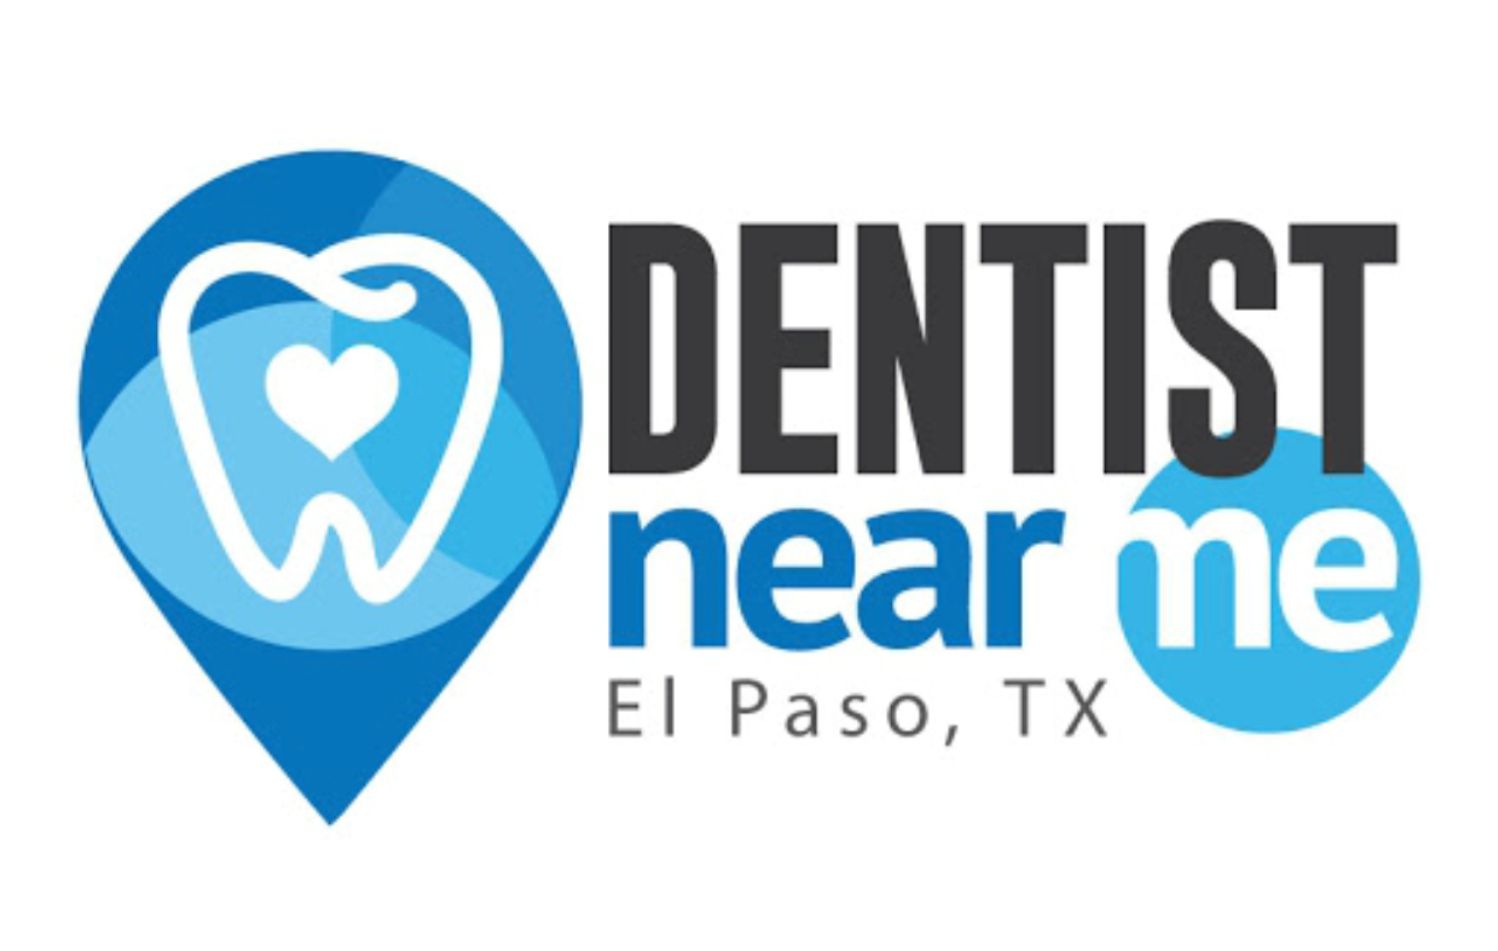 Dentist Near Me - El Paso, TX Dental Office